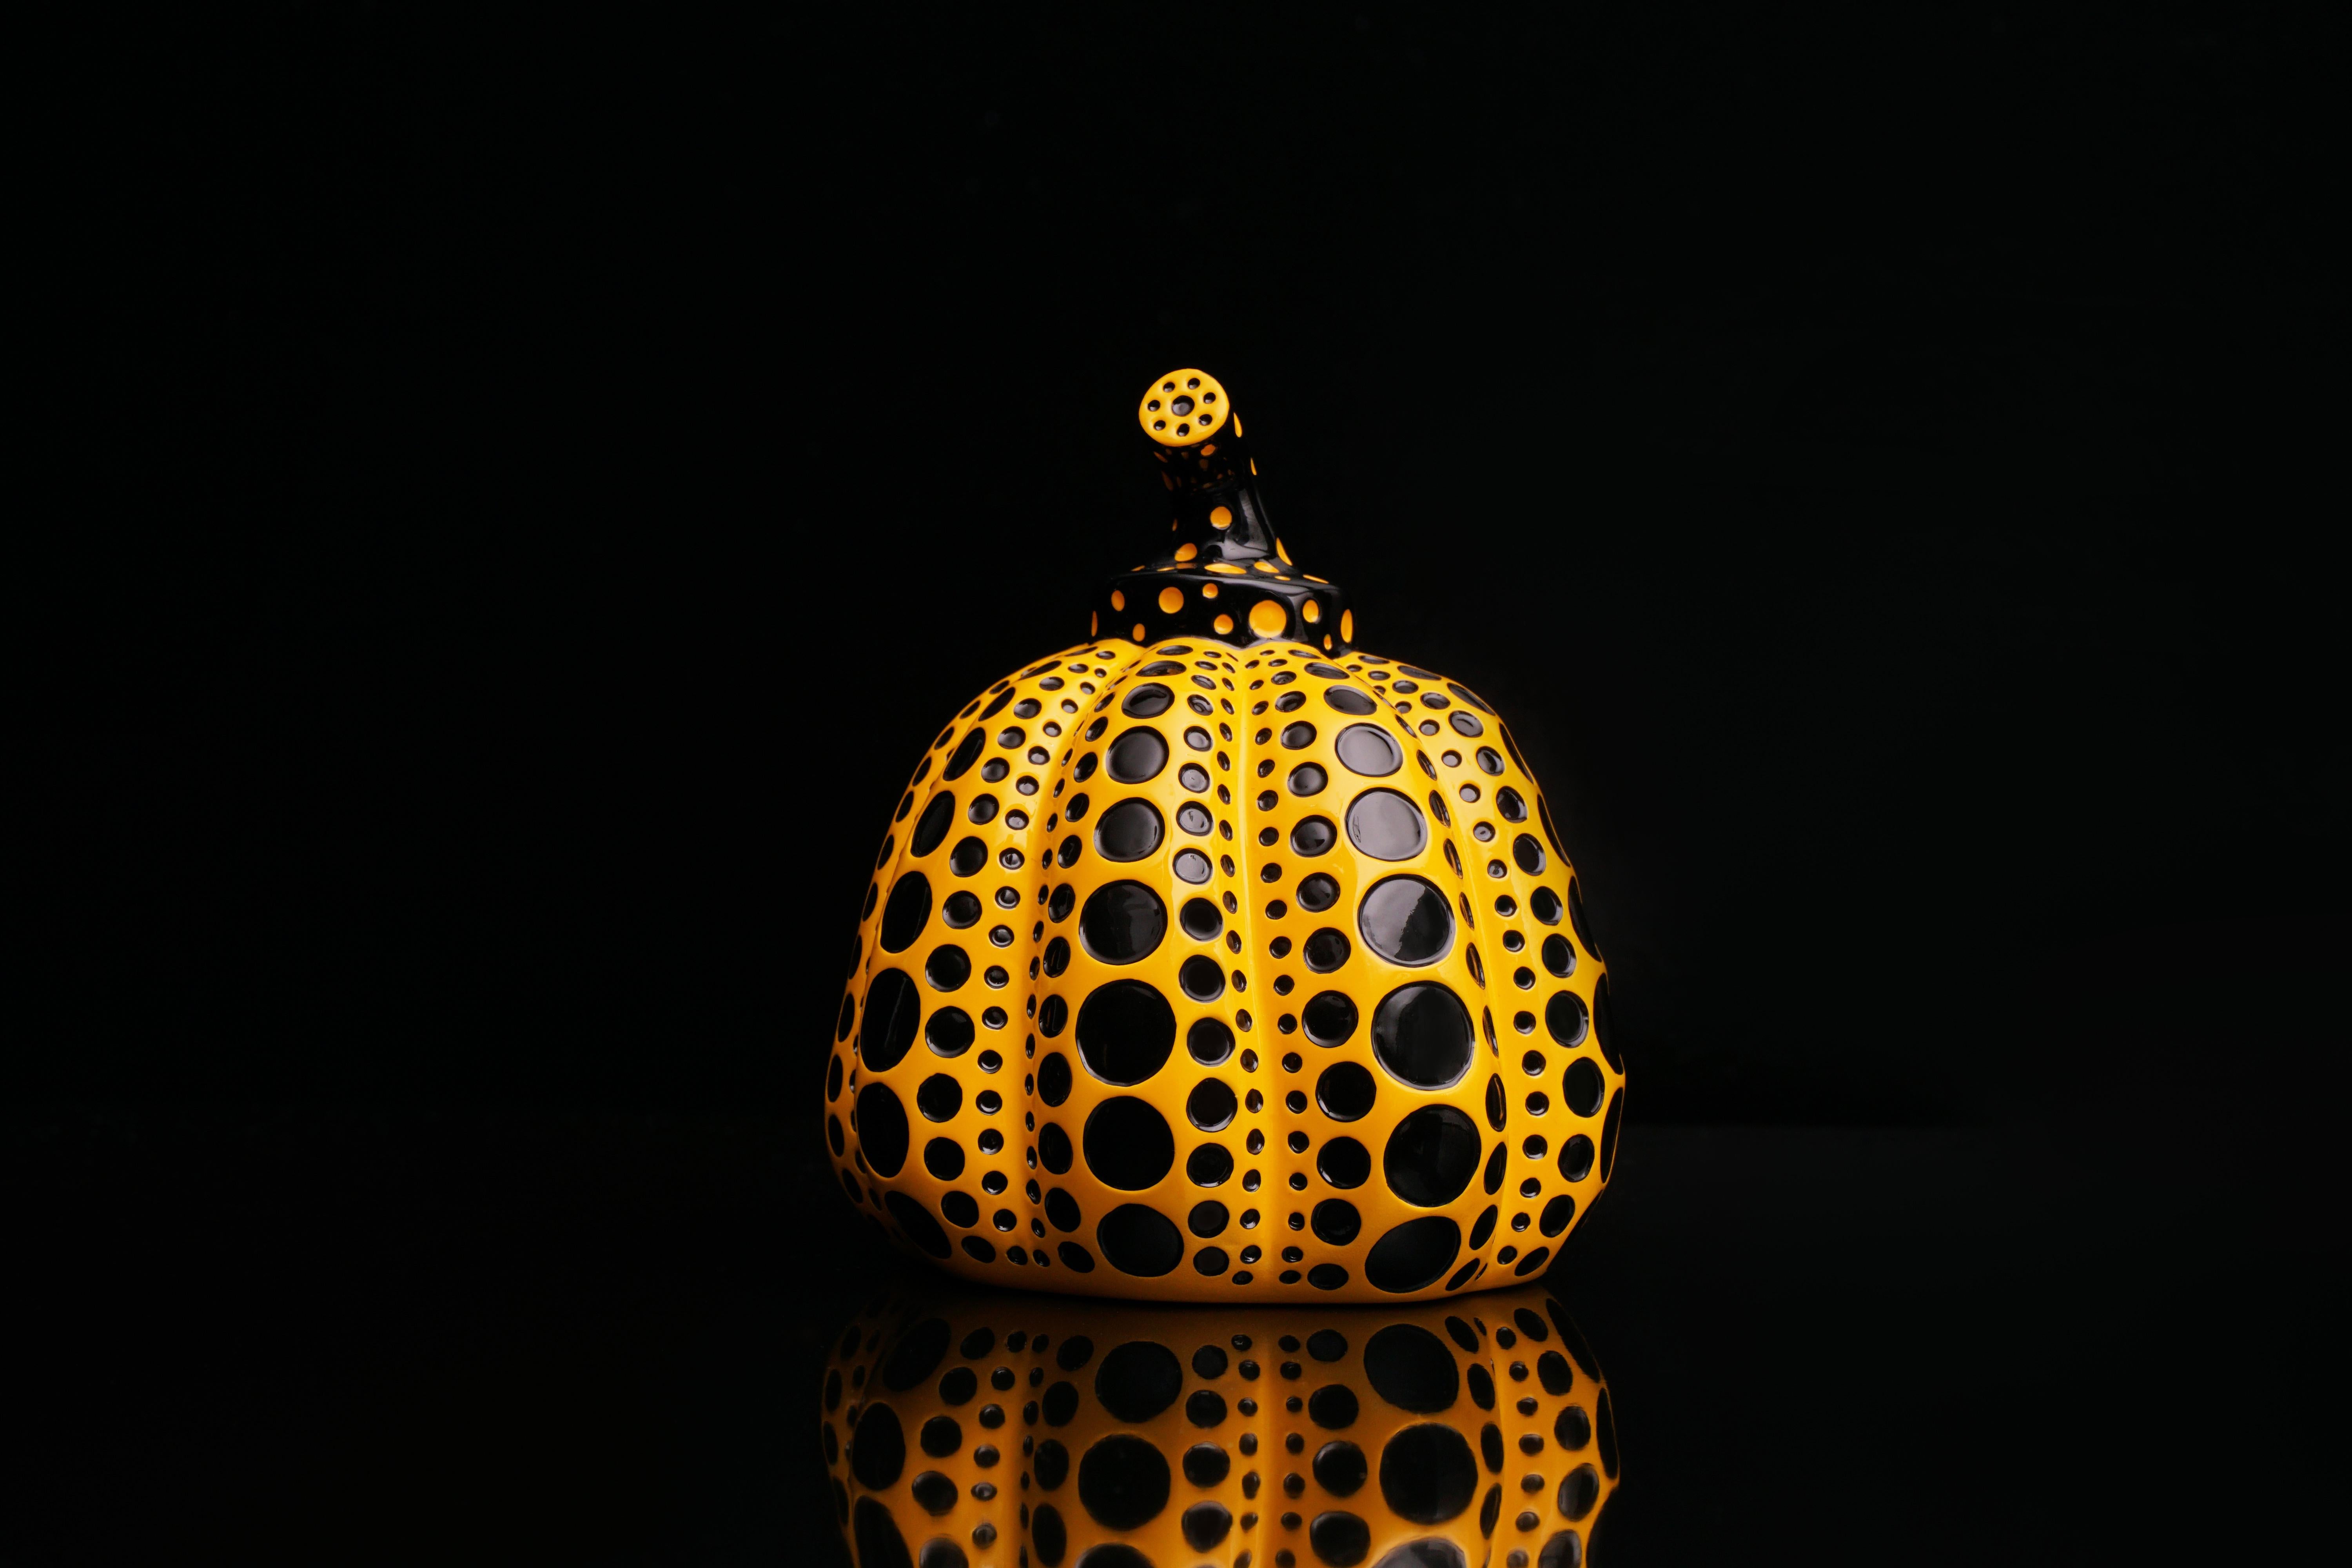 Yayoi Kusama 'Pumpkin' Yellow/Black Pumpkin Pop Art Resin Sculpture, 2016